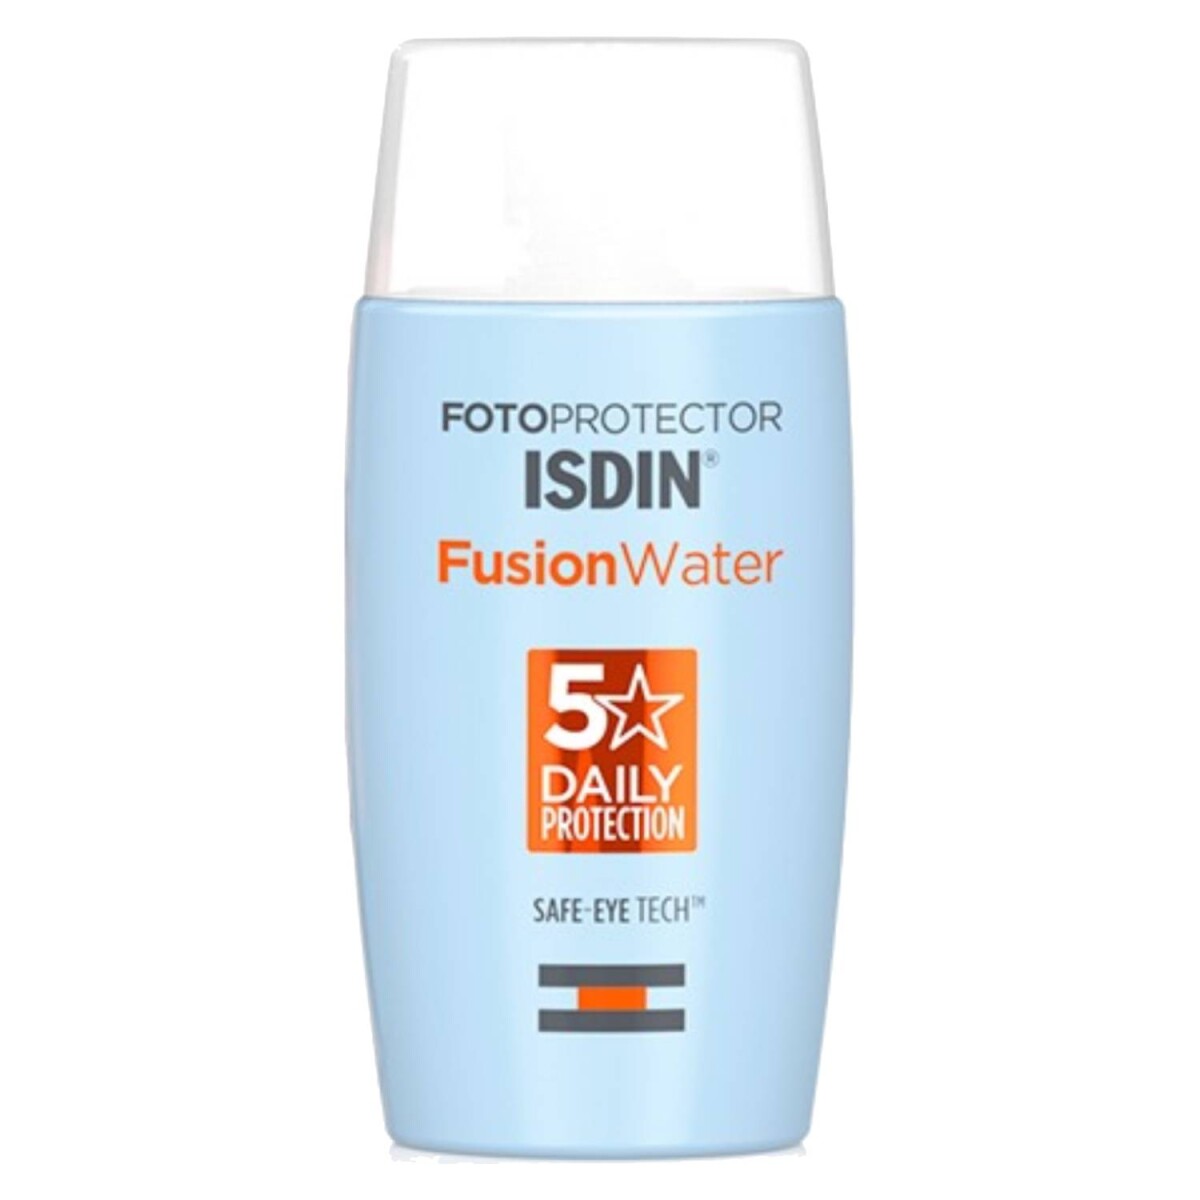 Fotoprotector Facial ISDIN Fusion Water SPF 50 